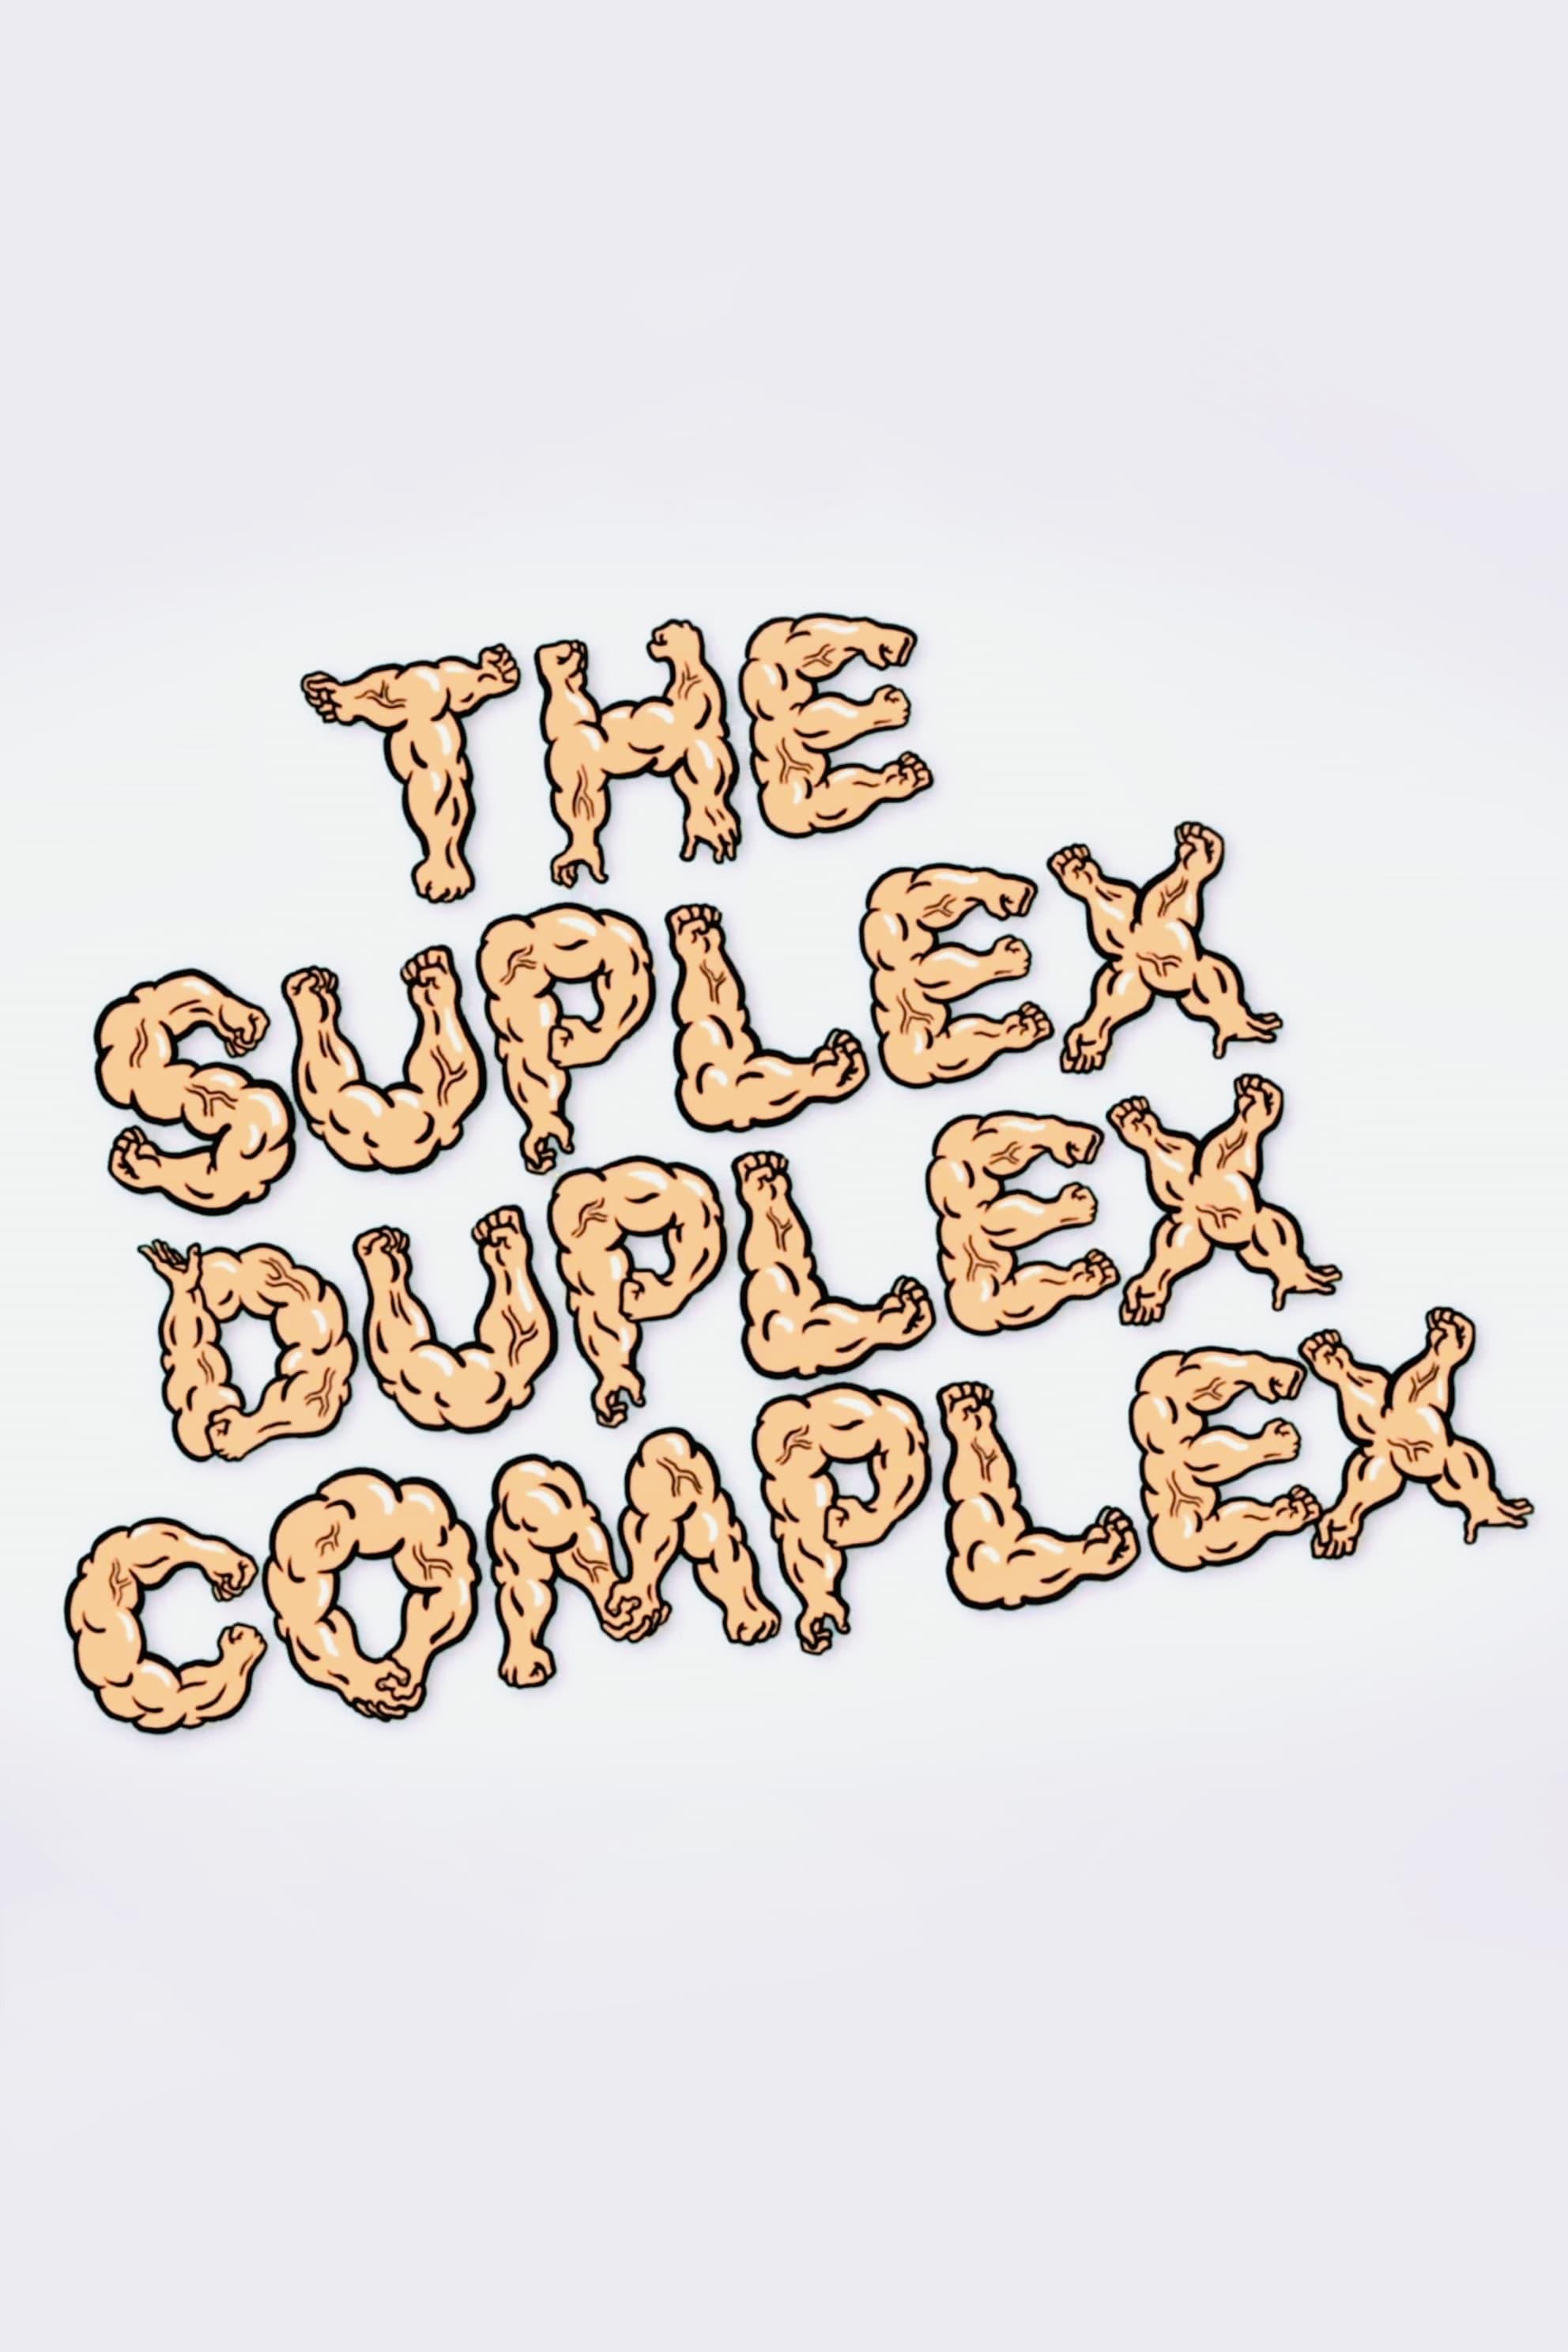 The Suplex Duplex Complex poster